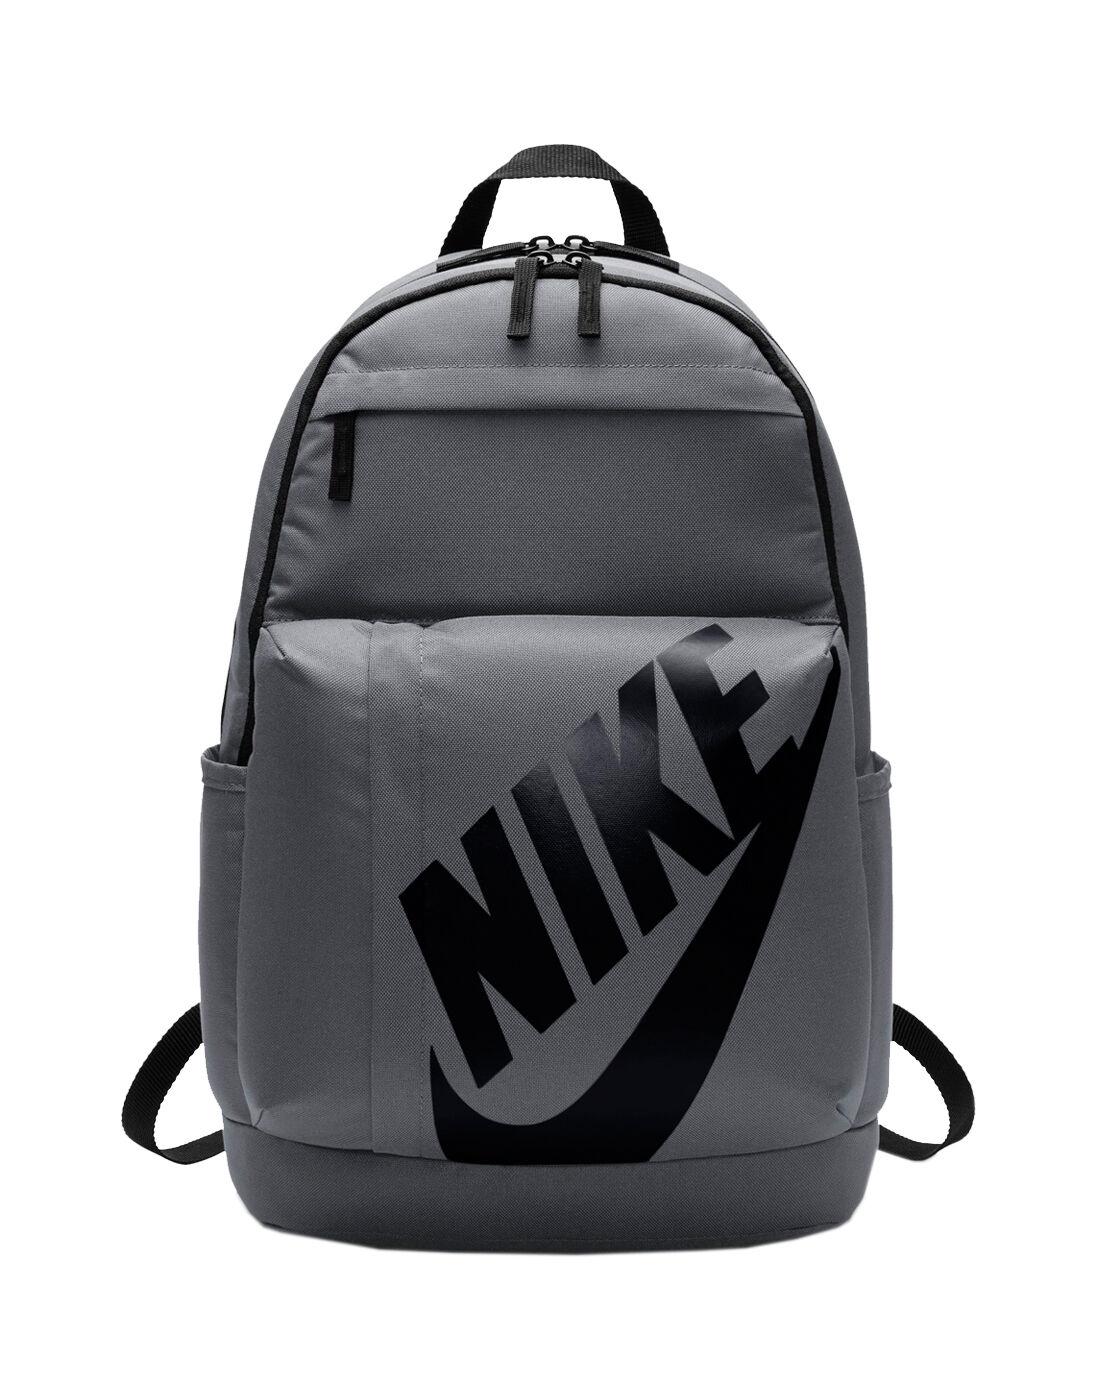 Grey Nike School Bag | Life Style Sports